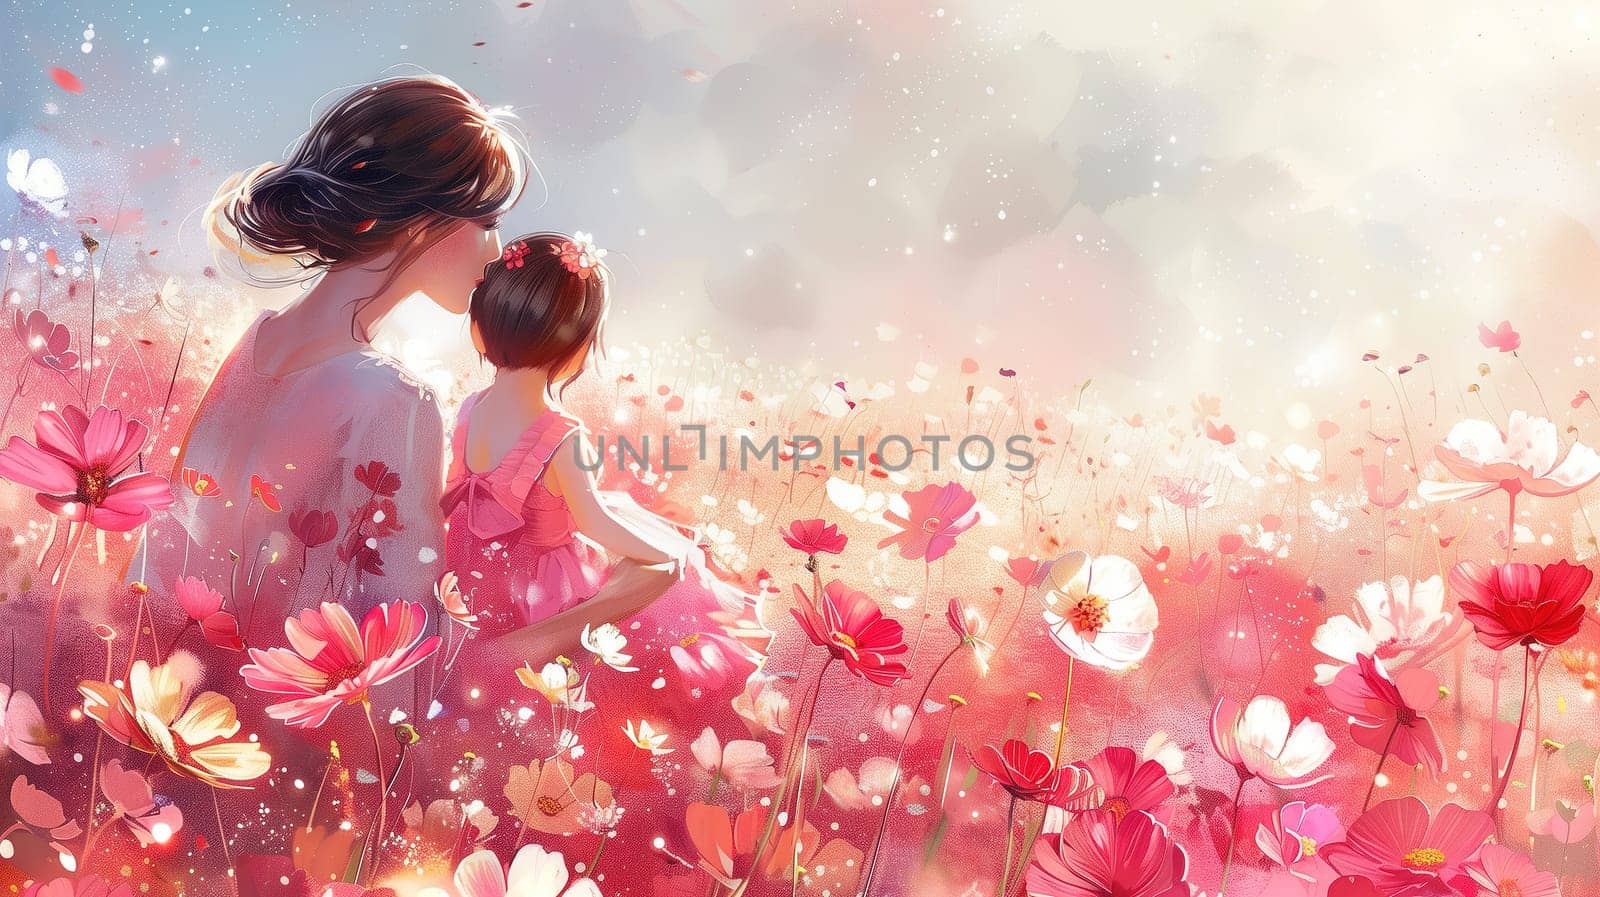 Two People Walking in a Field of Flowers by TRMK